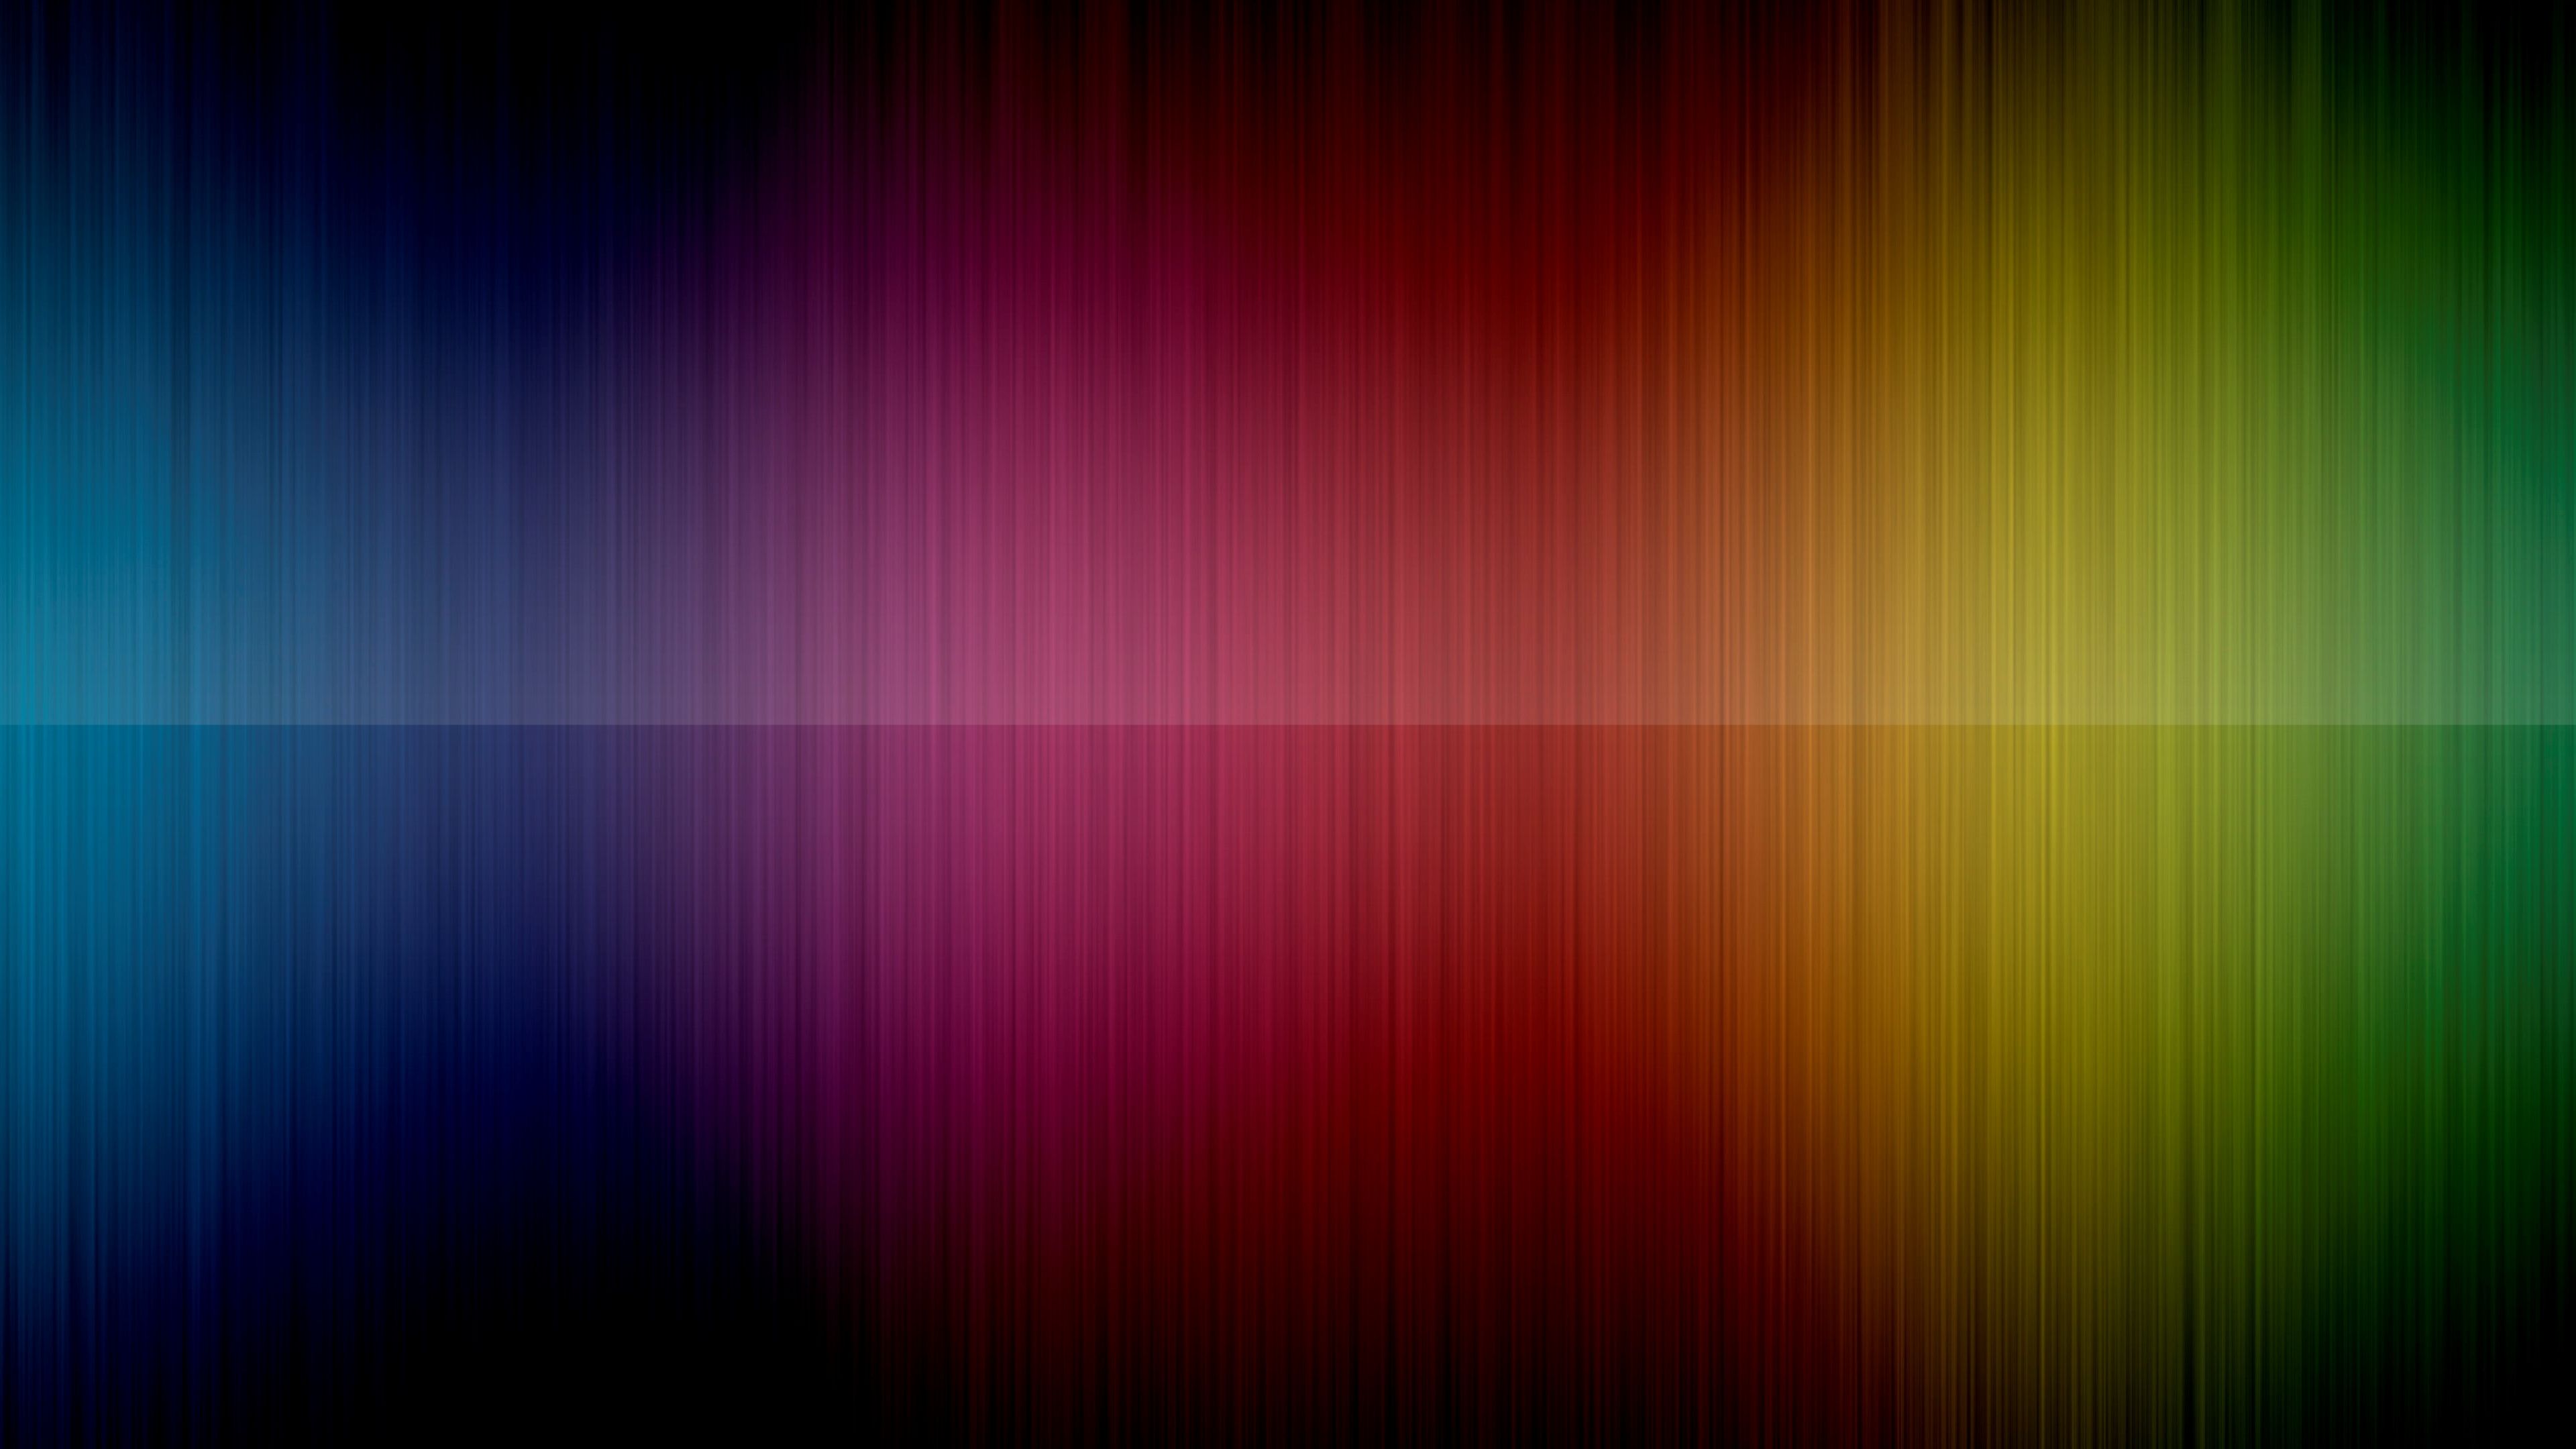 Rainbow Background Ultra HD Wallpaper. UHD Wallpaper.Net